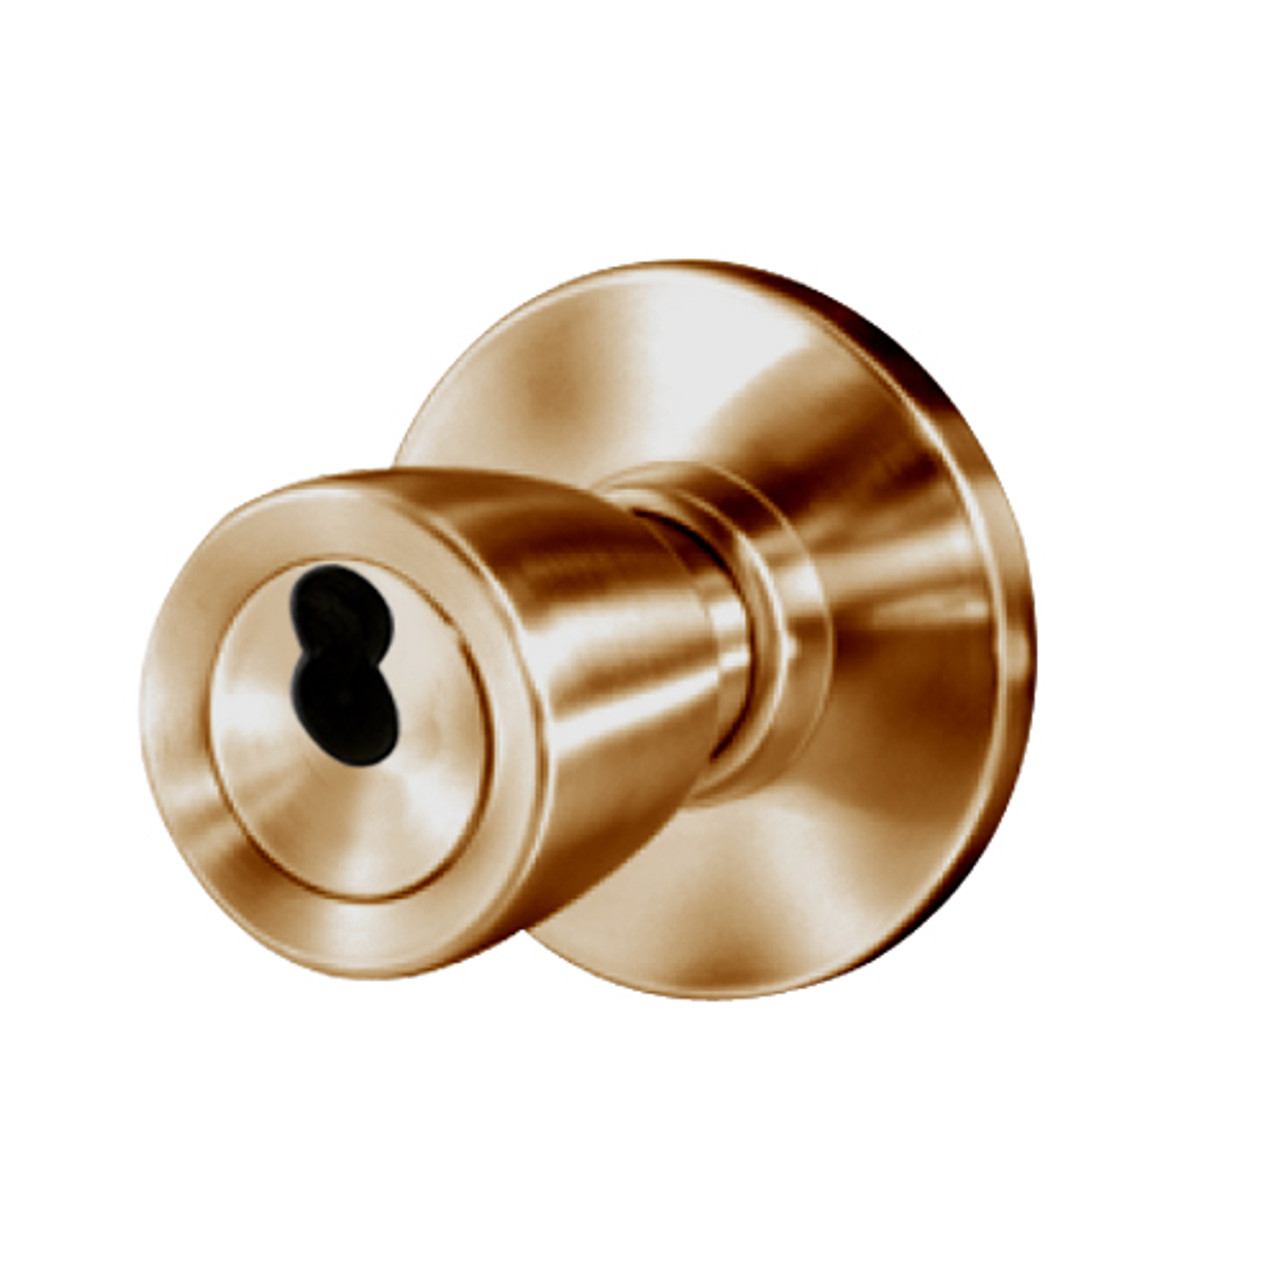 8K57YR6ASTK612 Best 8K Series Exit Heavy Duty Cylindrical Knob Locks with Tulip Style in Satin Bronze